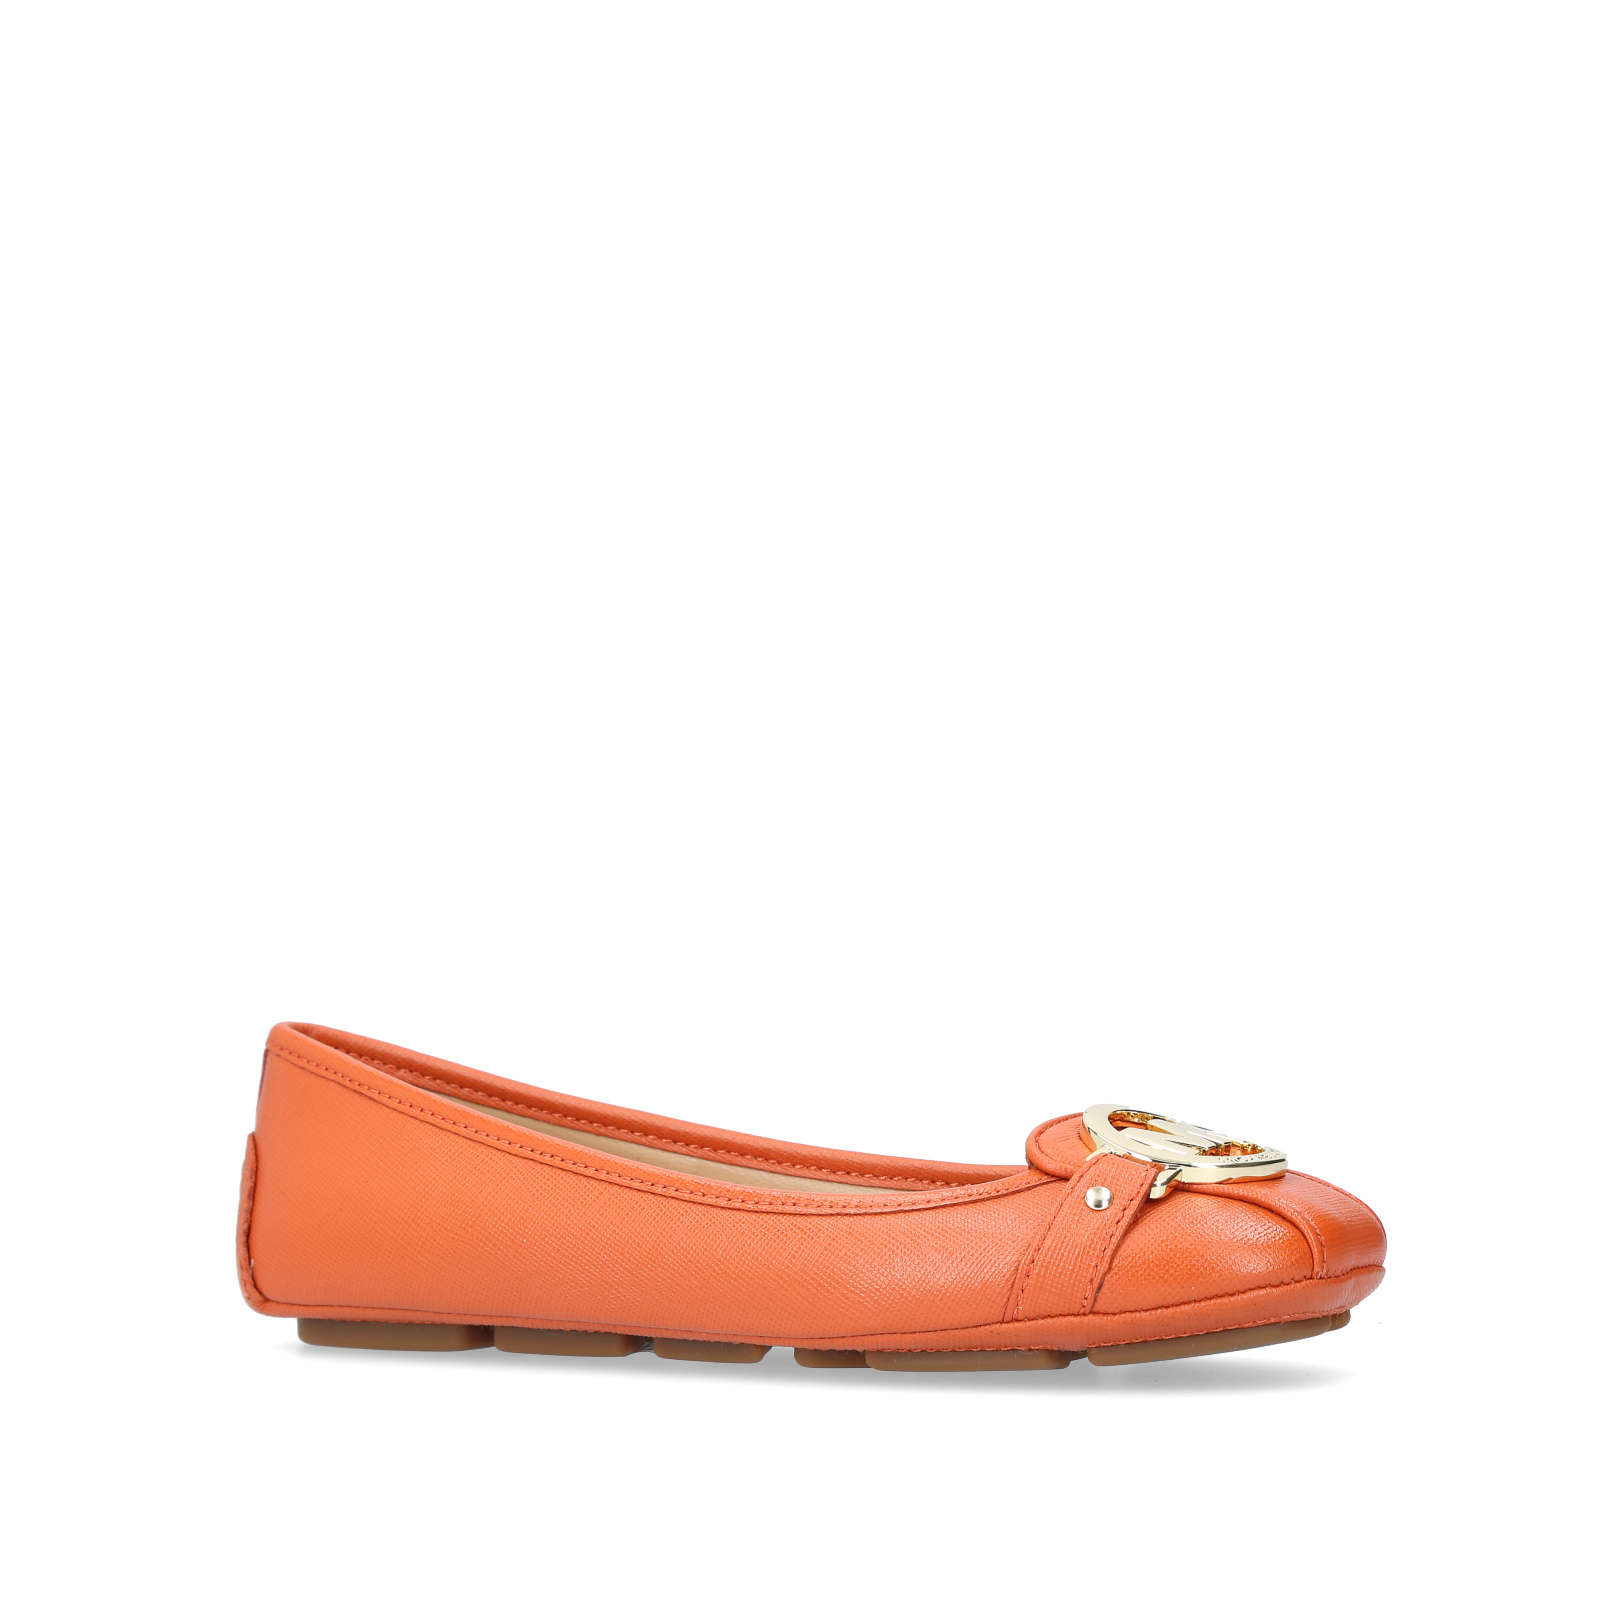 michael kors shoes orange